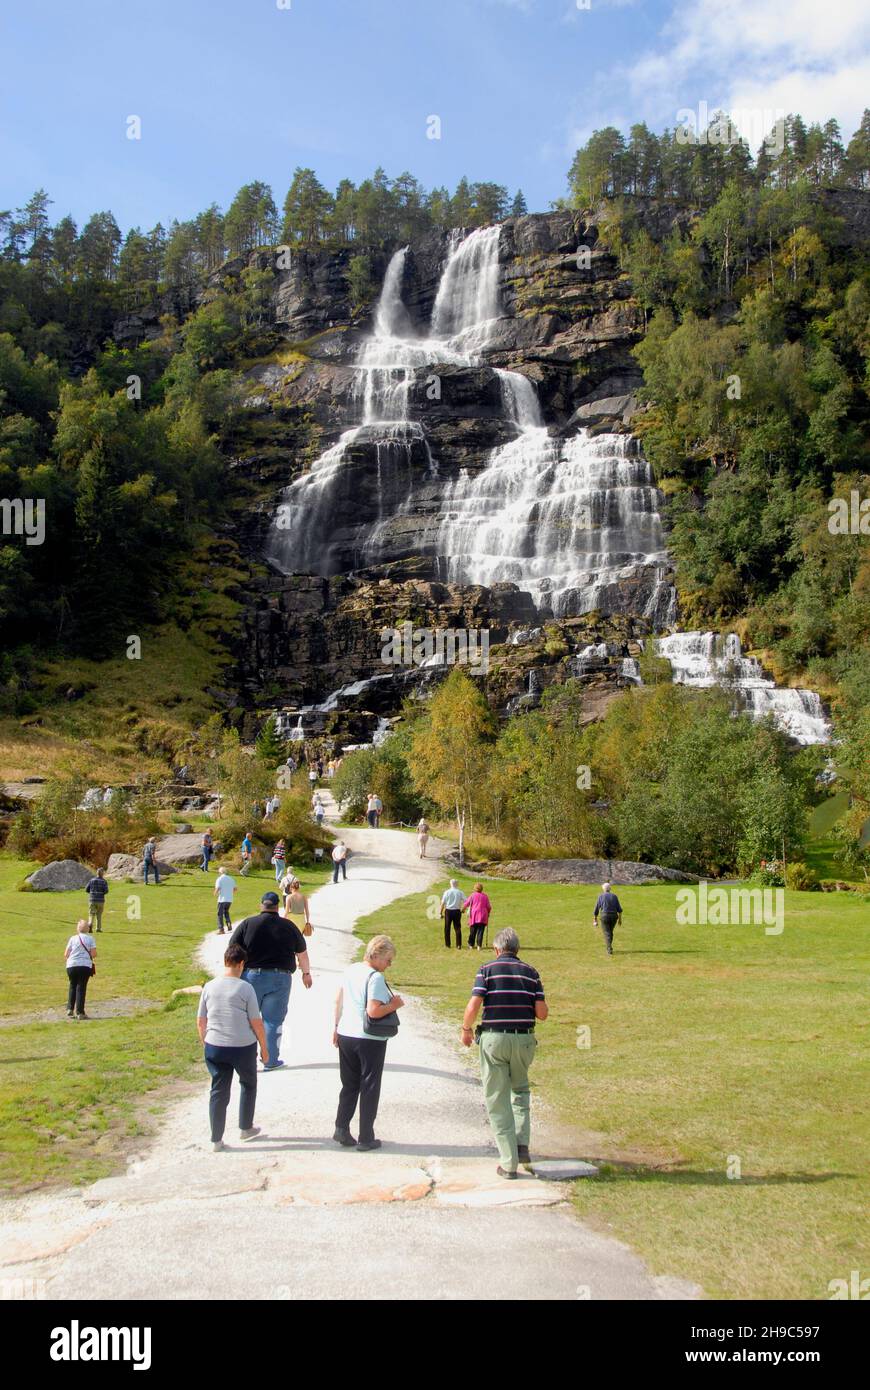 Tourists flocking to see the Tvindefossen Waterfall, Norway Stock Photo